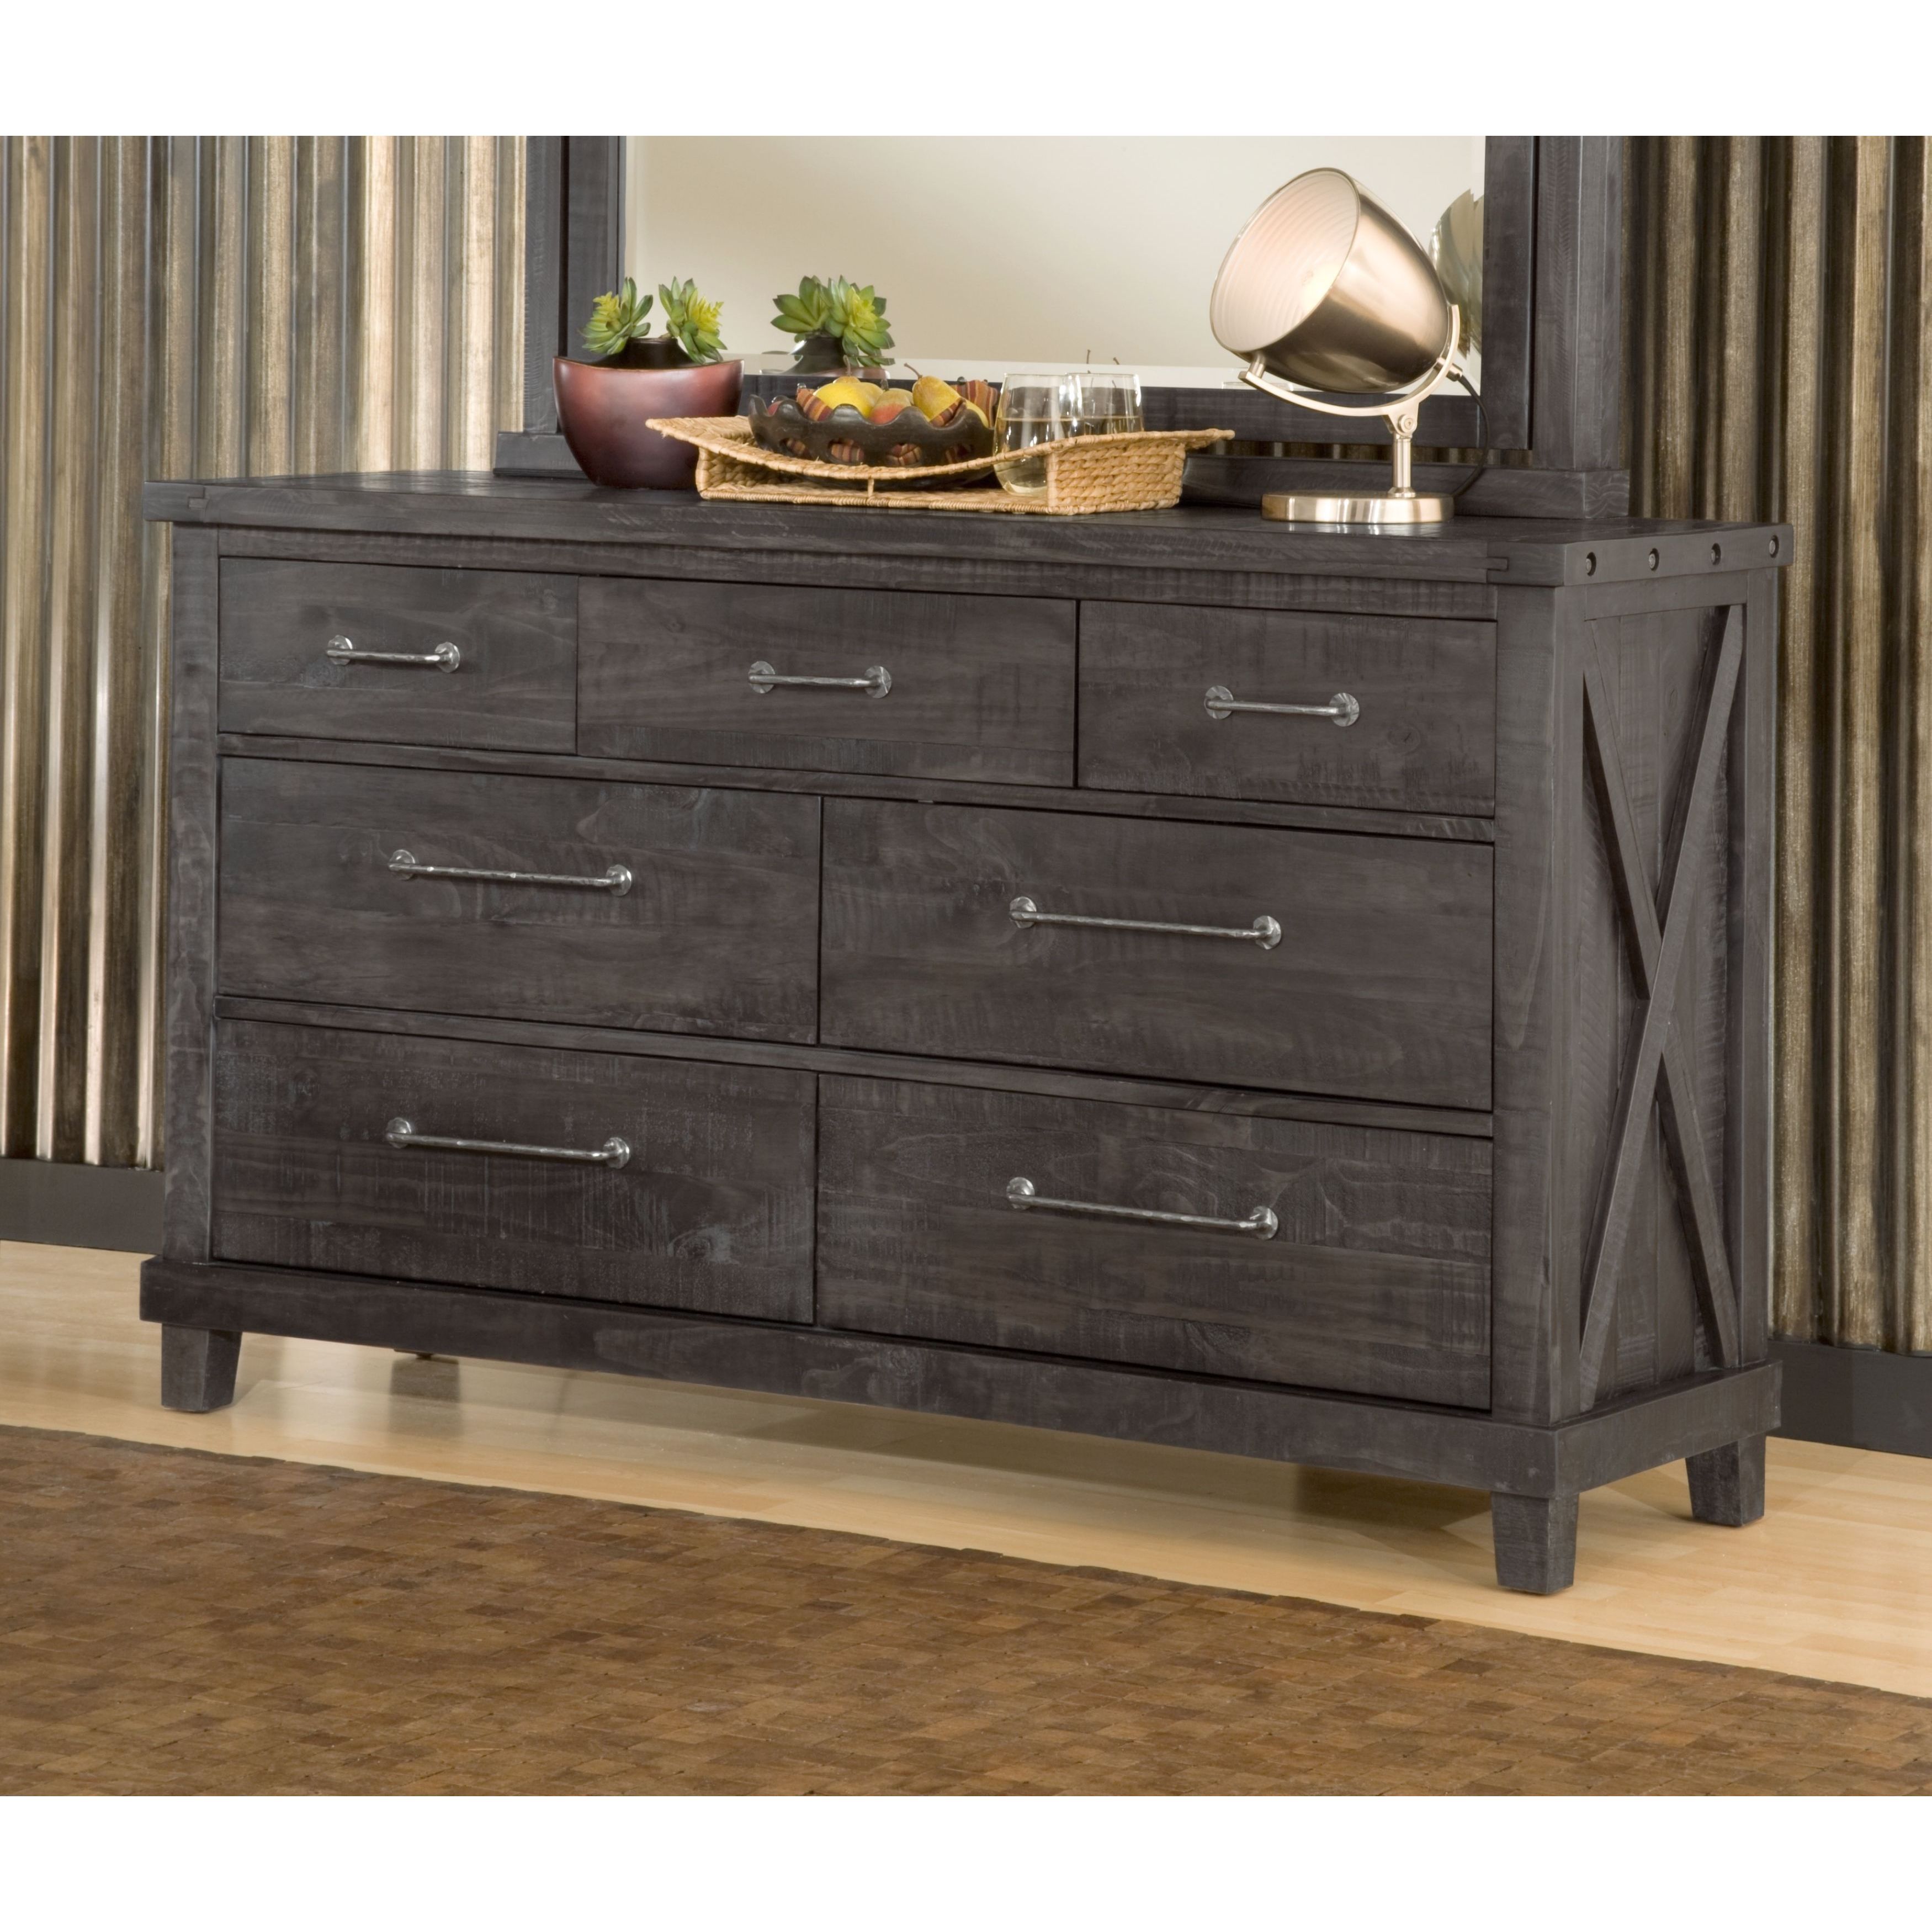 Shop Industrial Solid Wood Dresser In Cafe Overstock 10608398